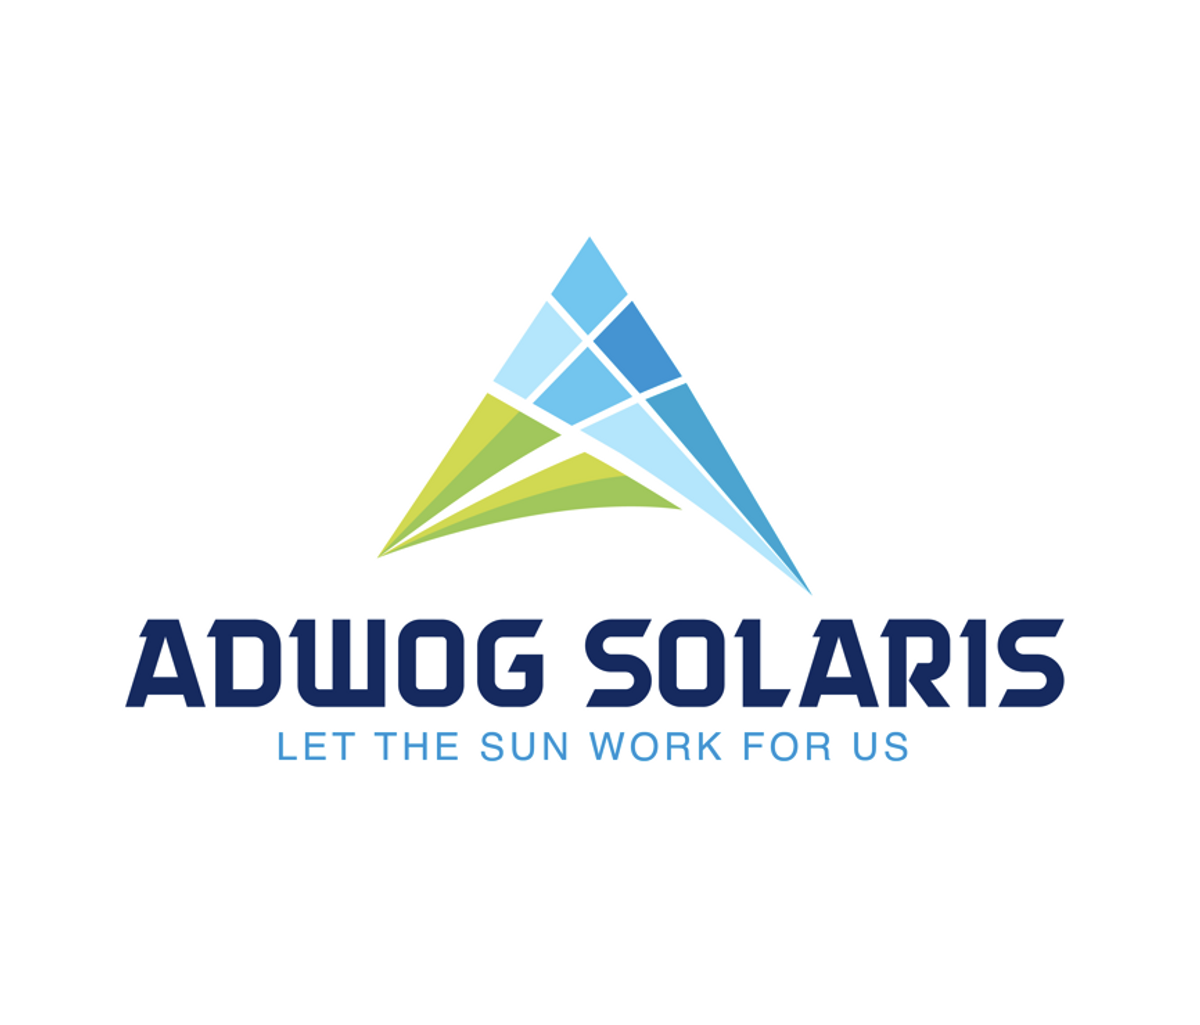 Adwog Solaris™